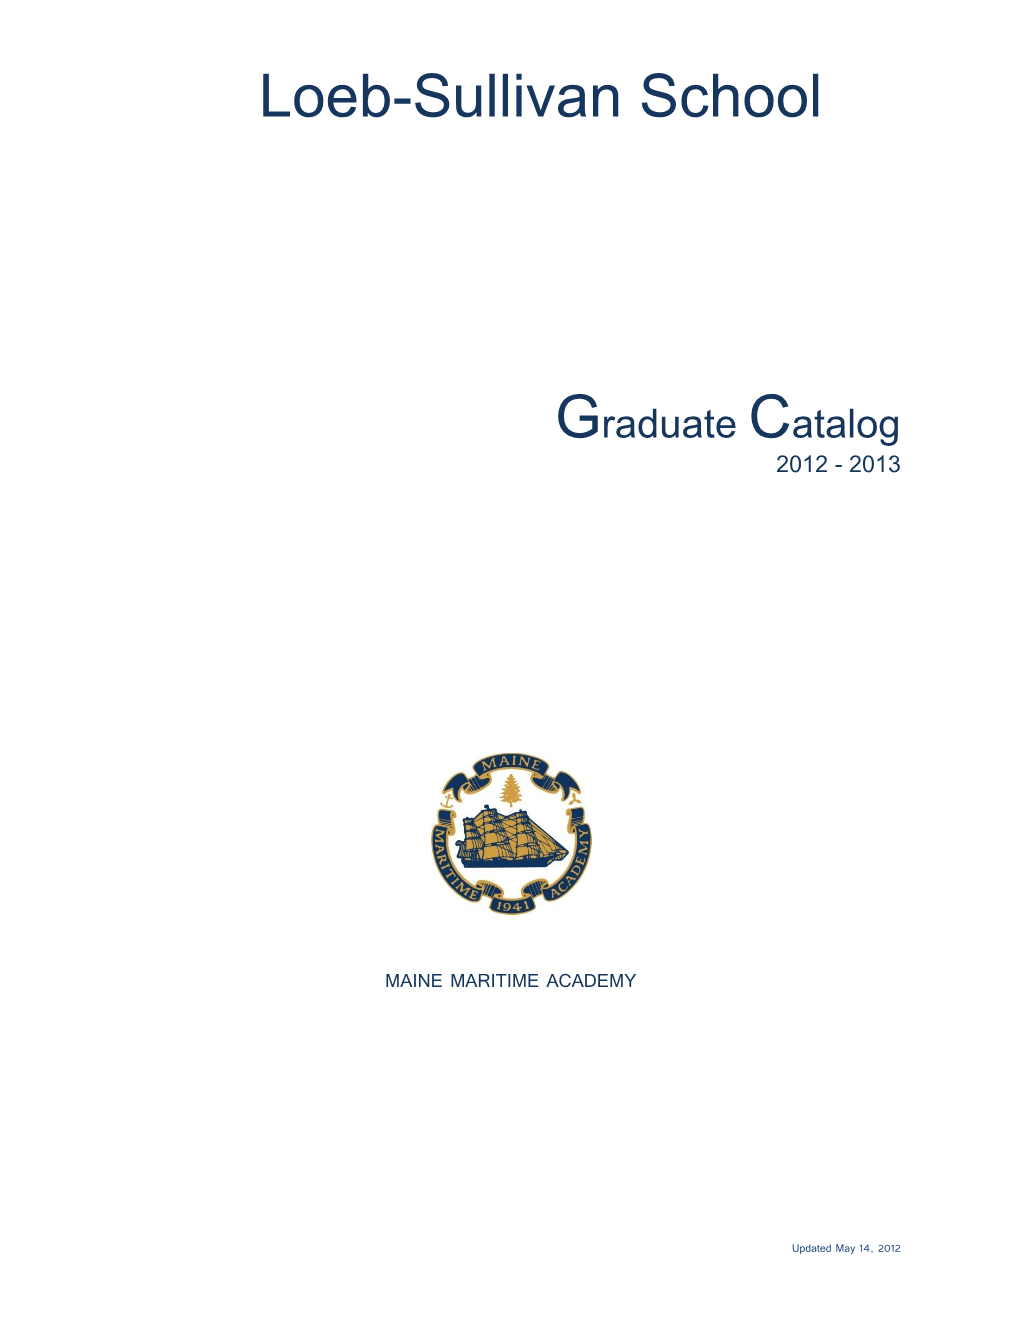 Graduate Catalog 2013